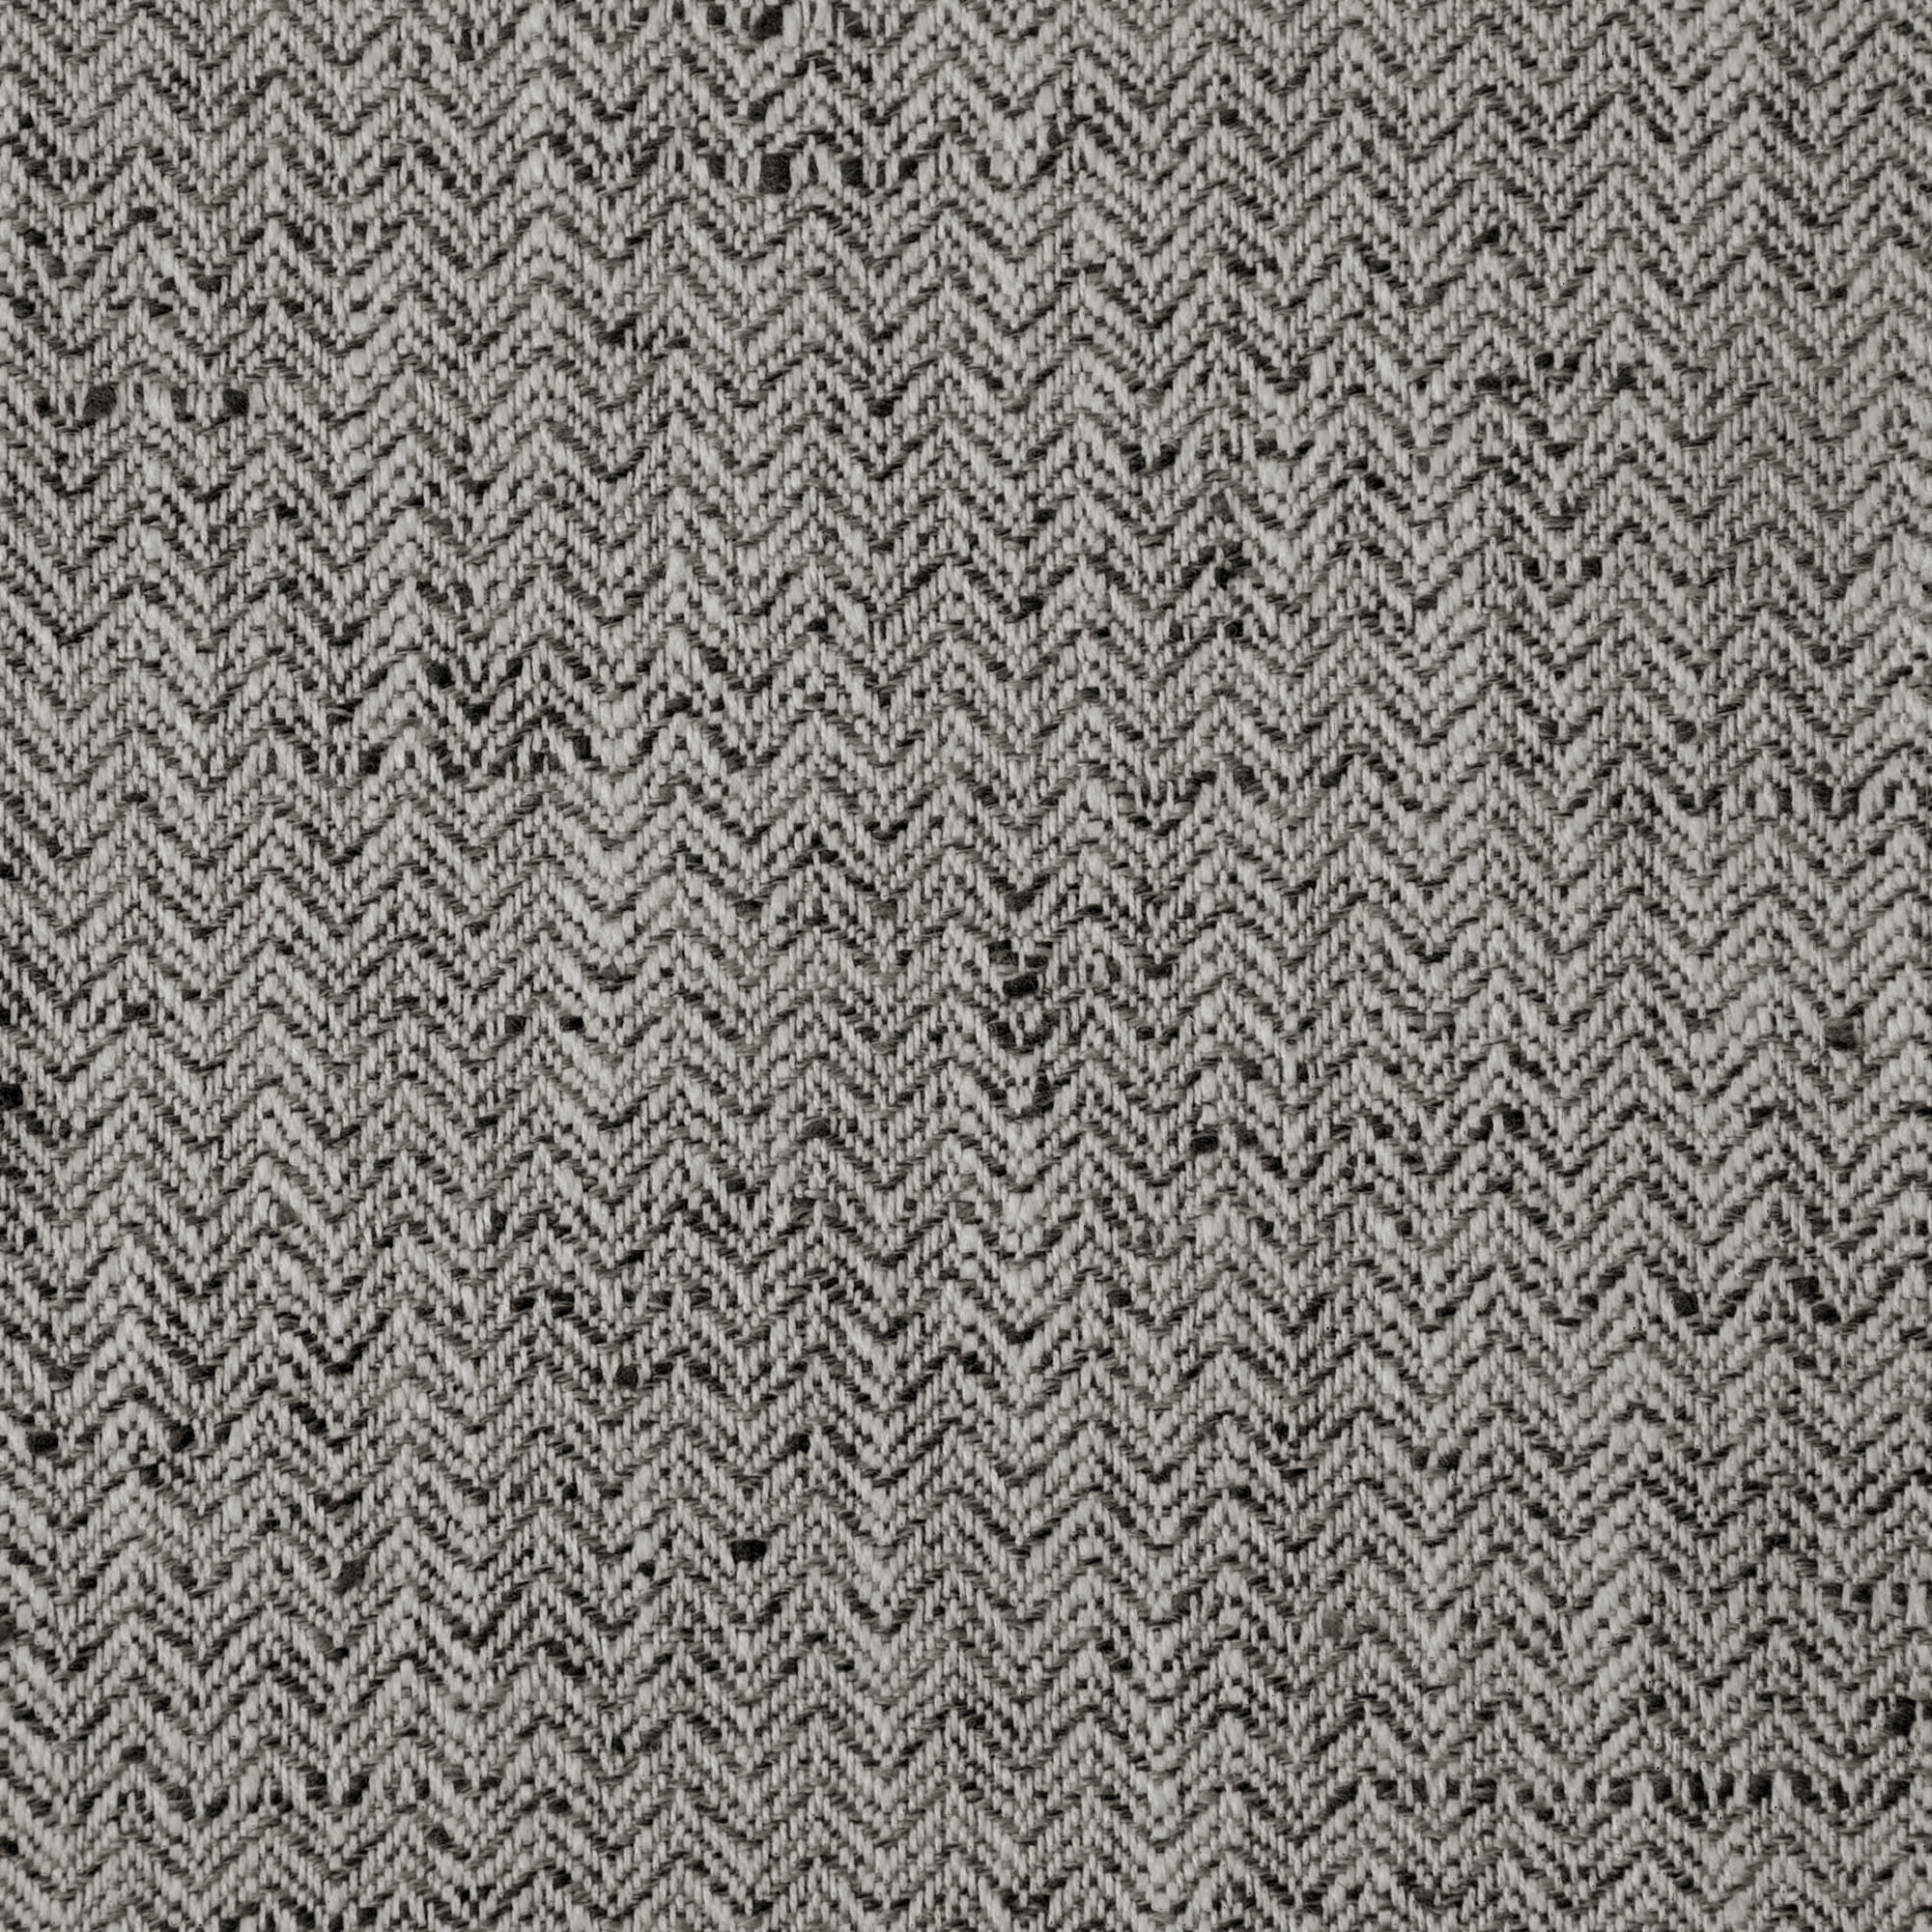 Ember Pine Fabric Swatch 6" x 6"